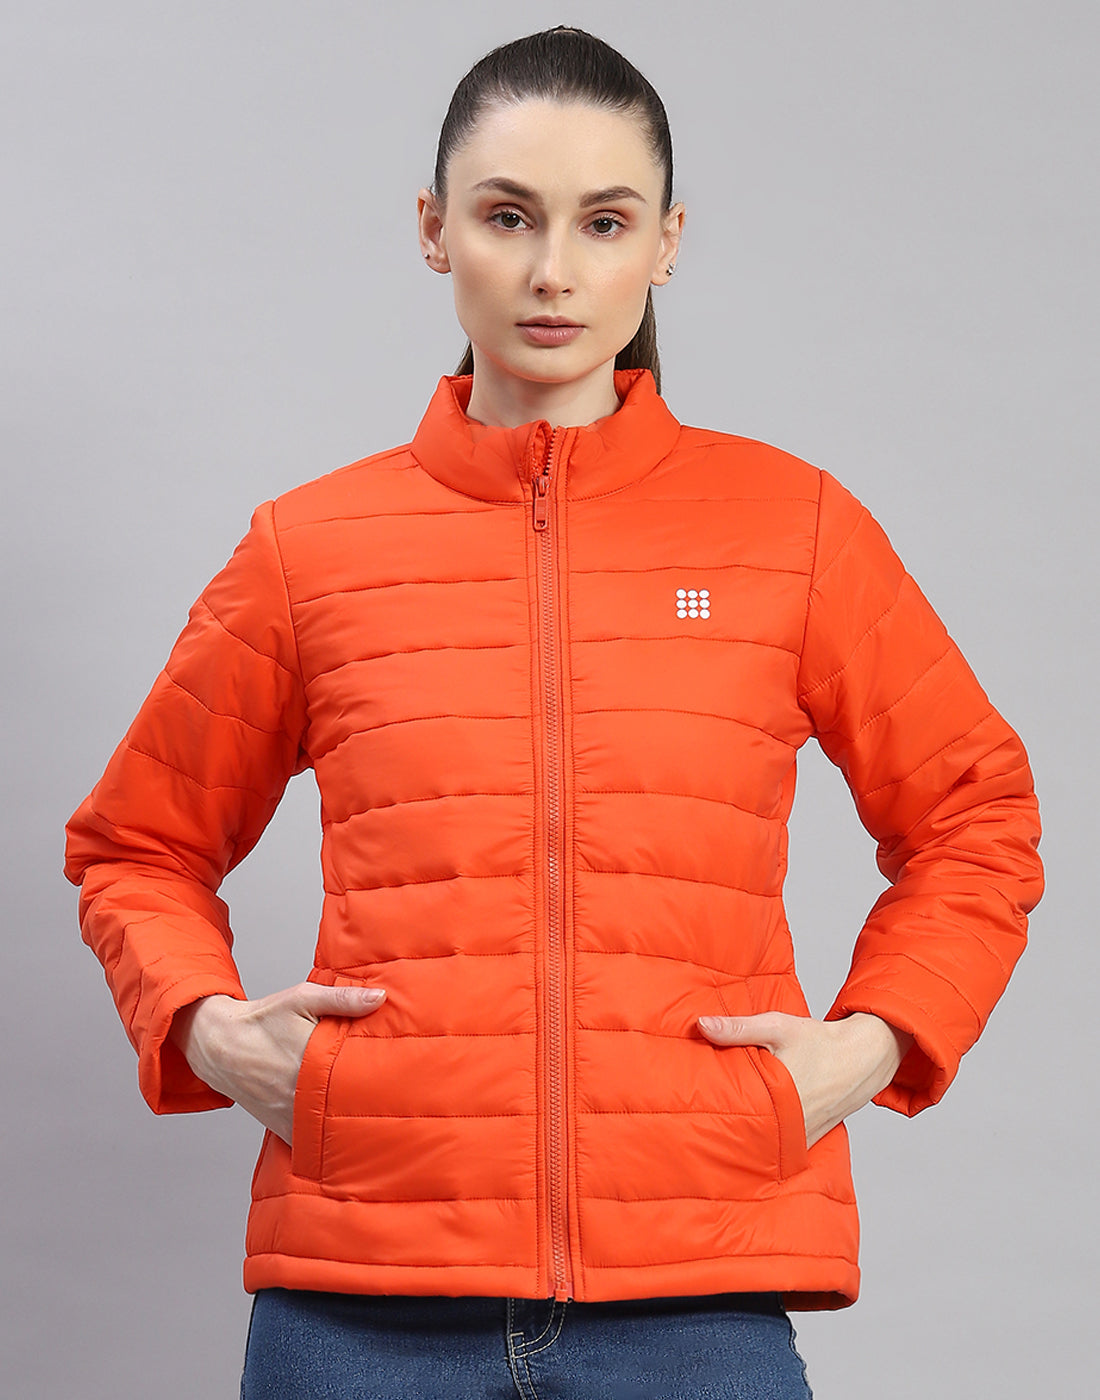 Women Orange Solid Stand Collar Full Sleeve Jacket